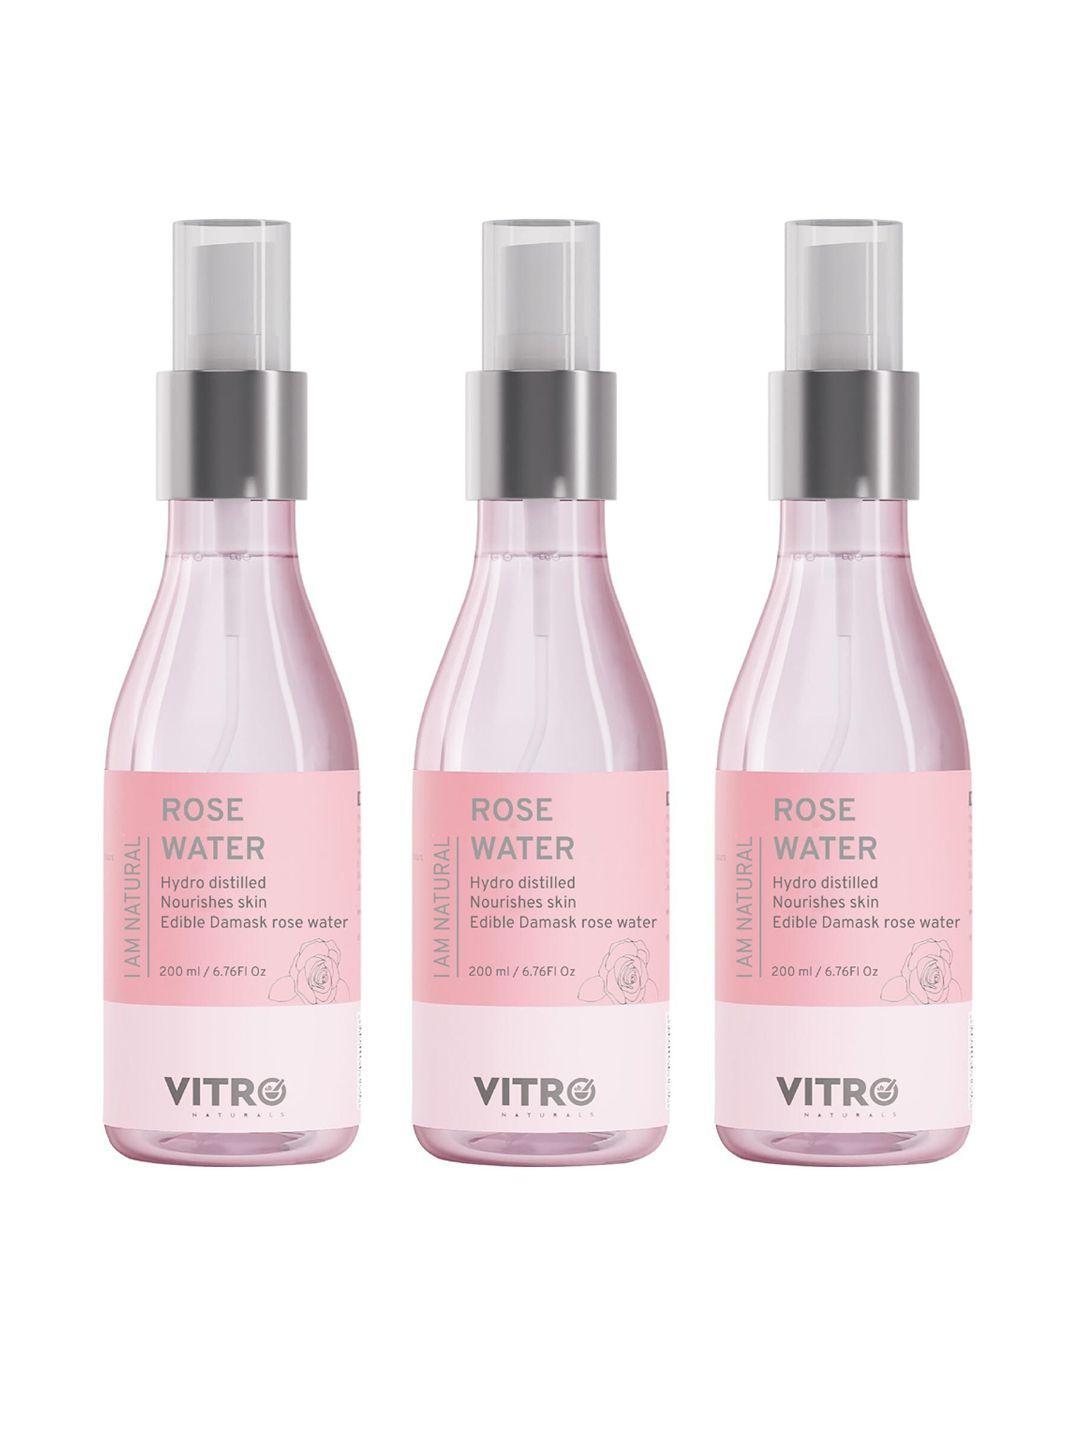 vitro set of 3 hydro distilled edible damask rose water sprays - 200 ml each